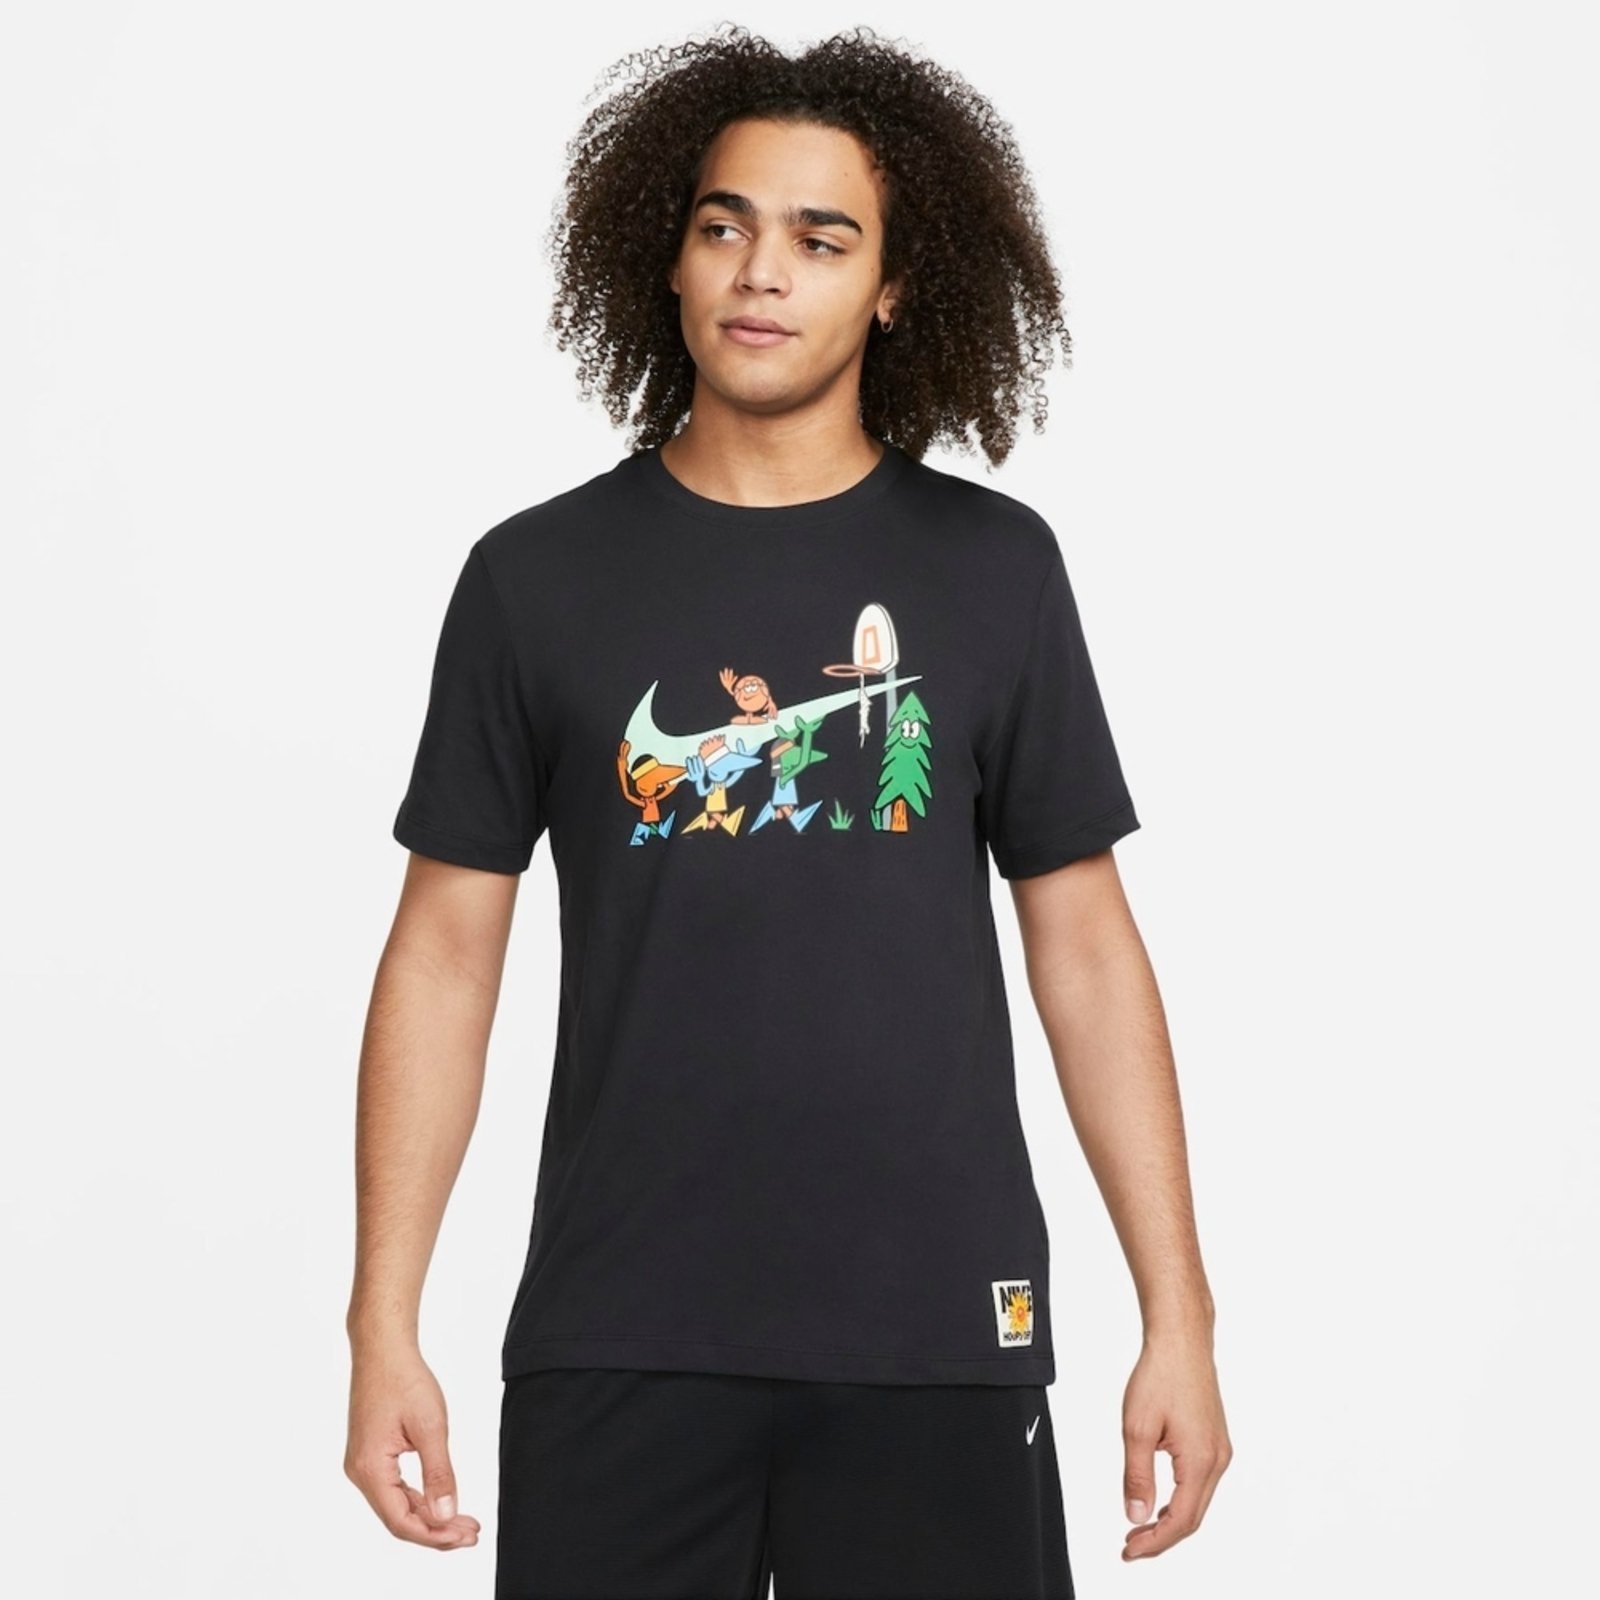 Camiseta Nike Dri-FIT Masculina - Compre Agora